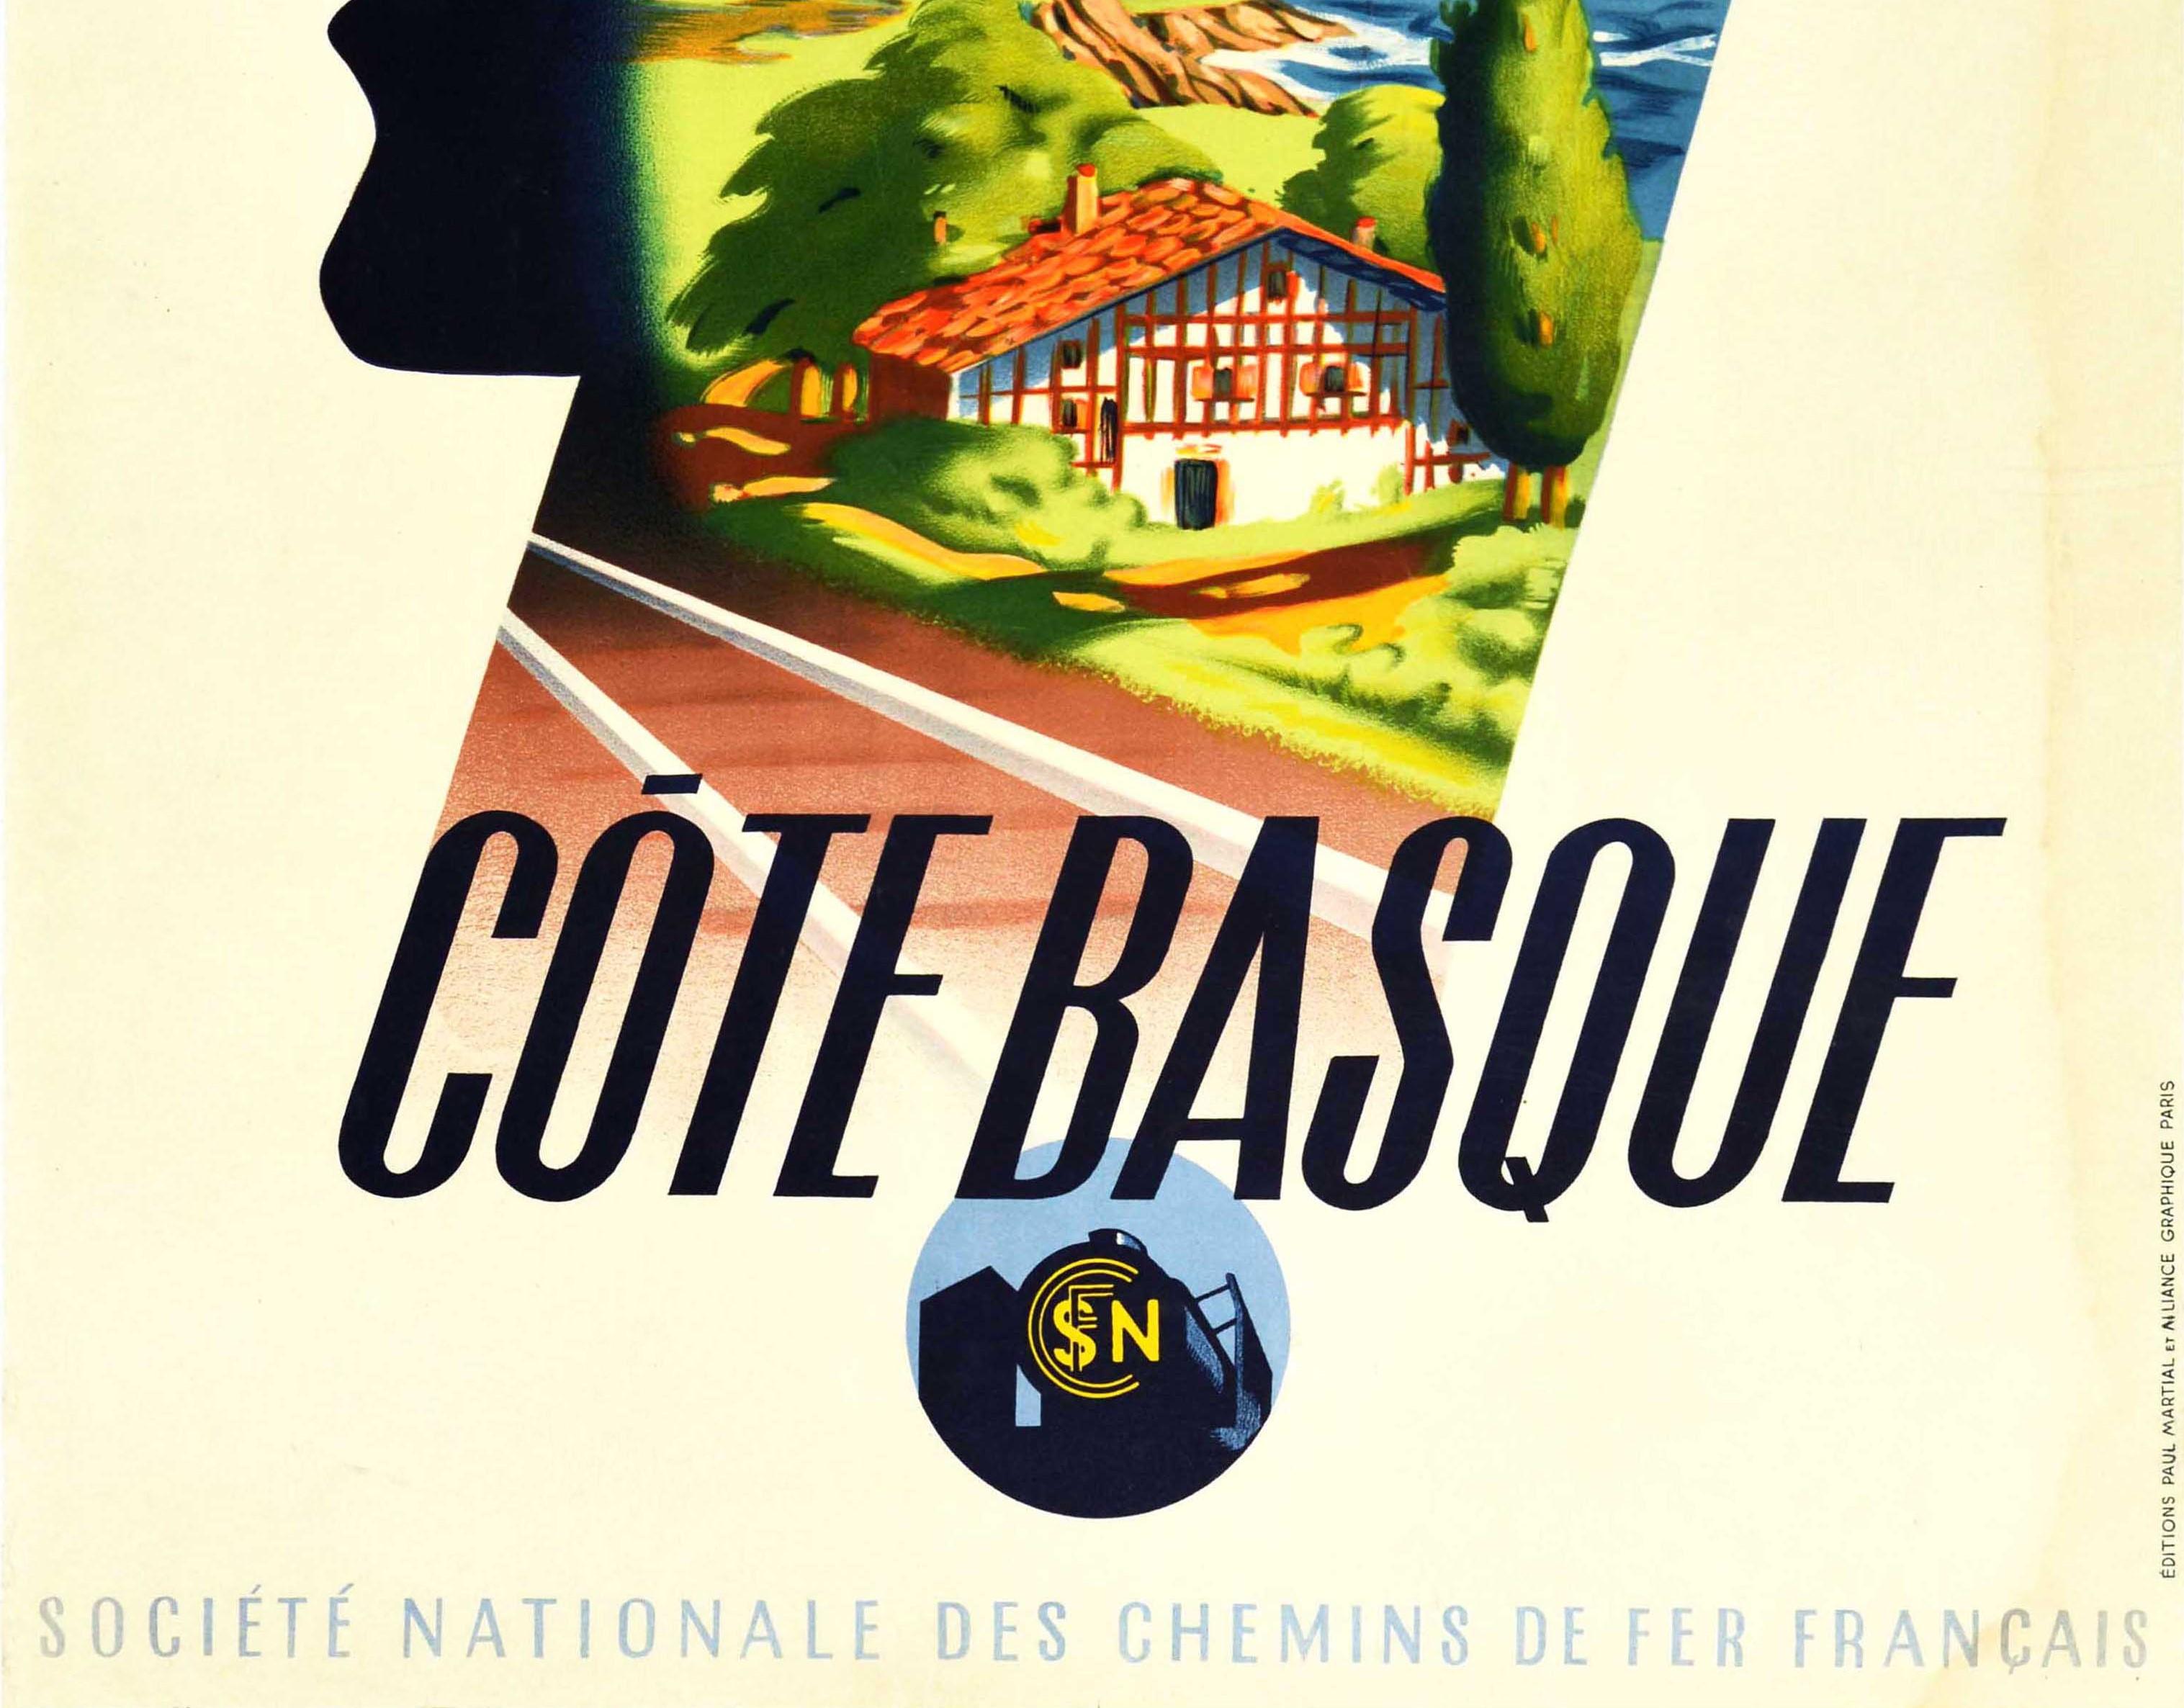 Art Deco Original Vintage Poster For Cote Basque Coast SNCF French Railway Travel Design For Sale